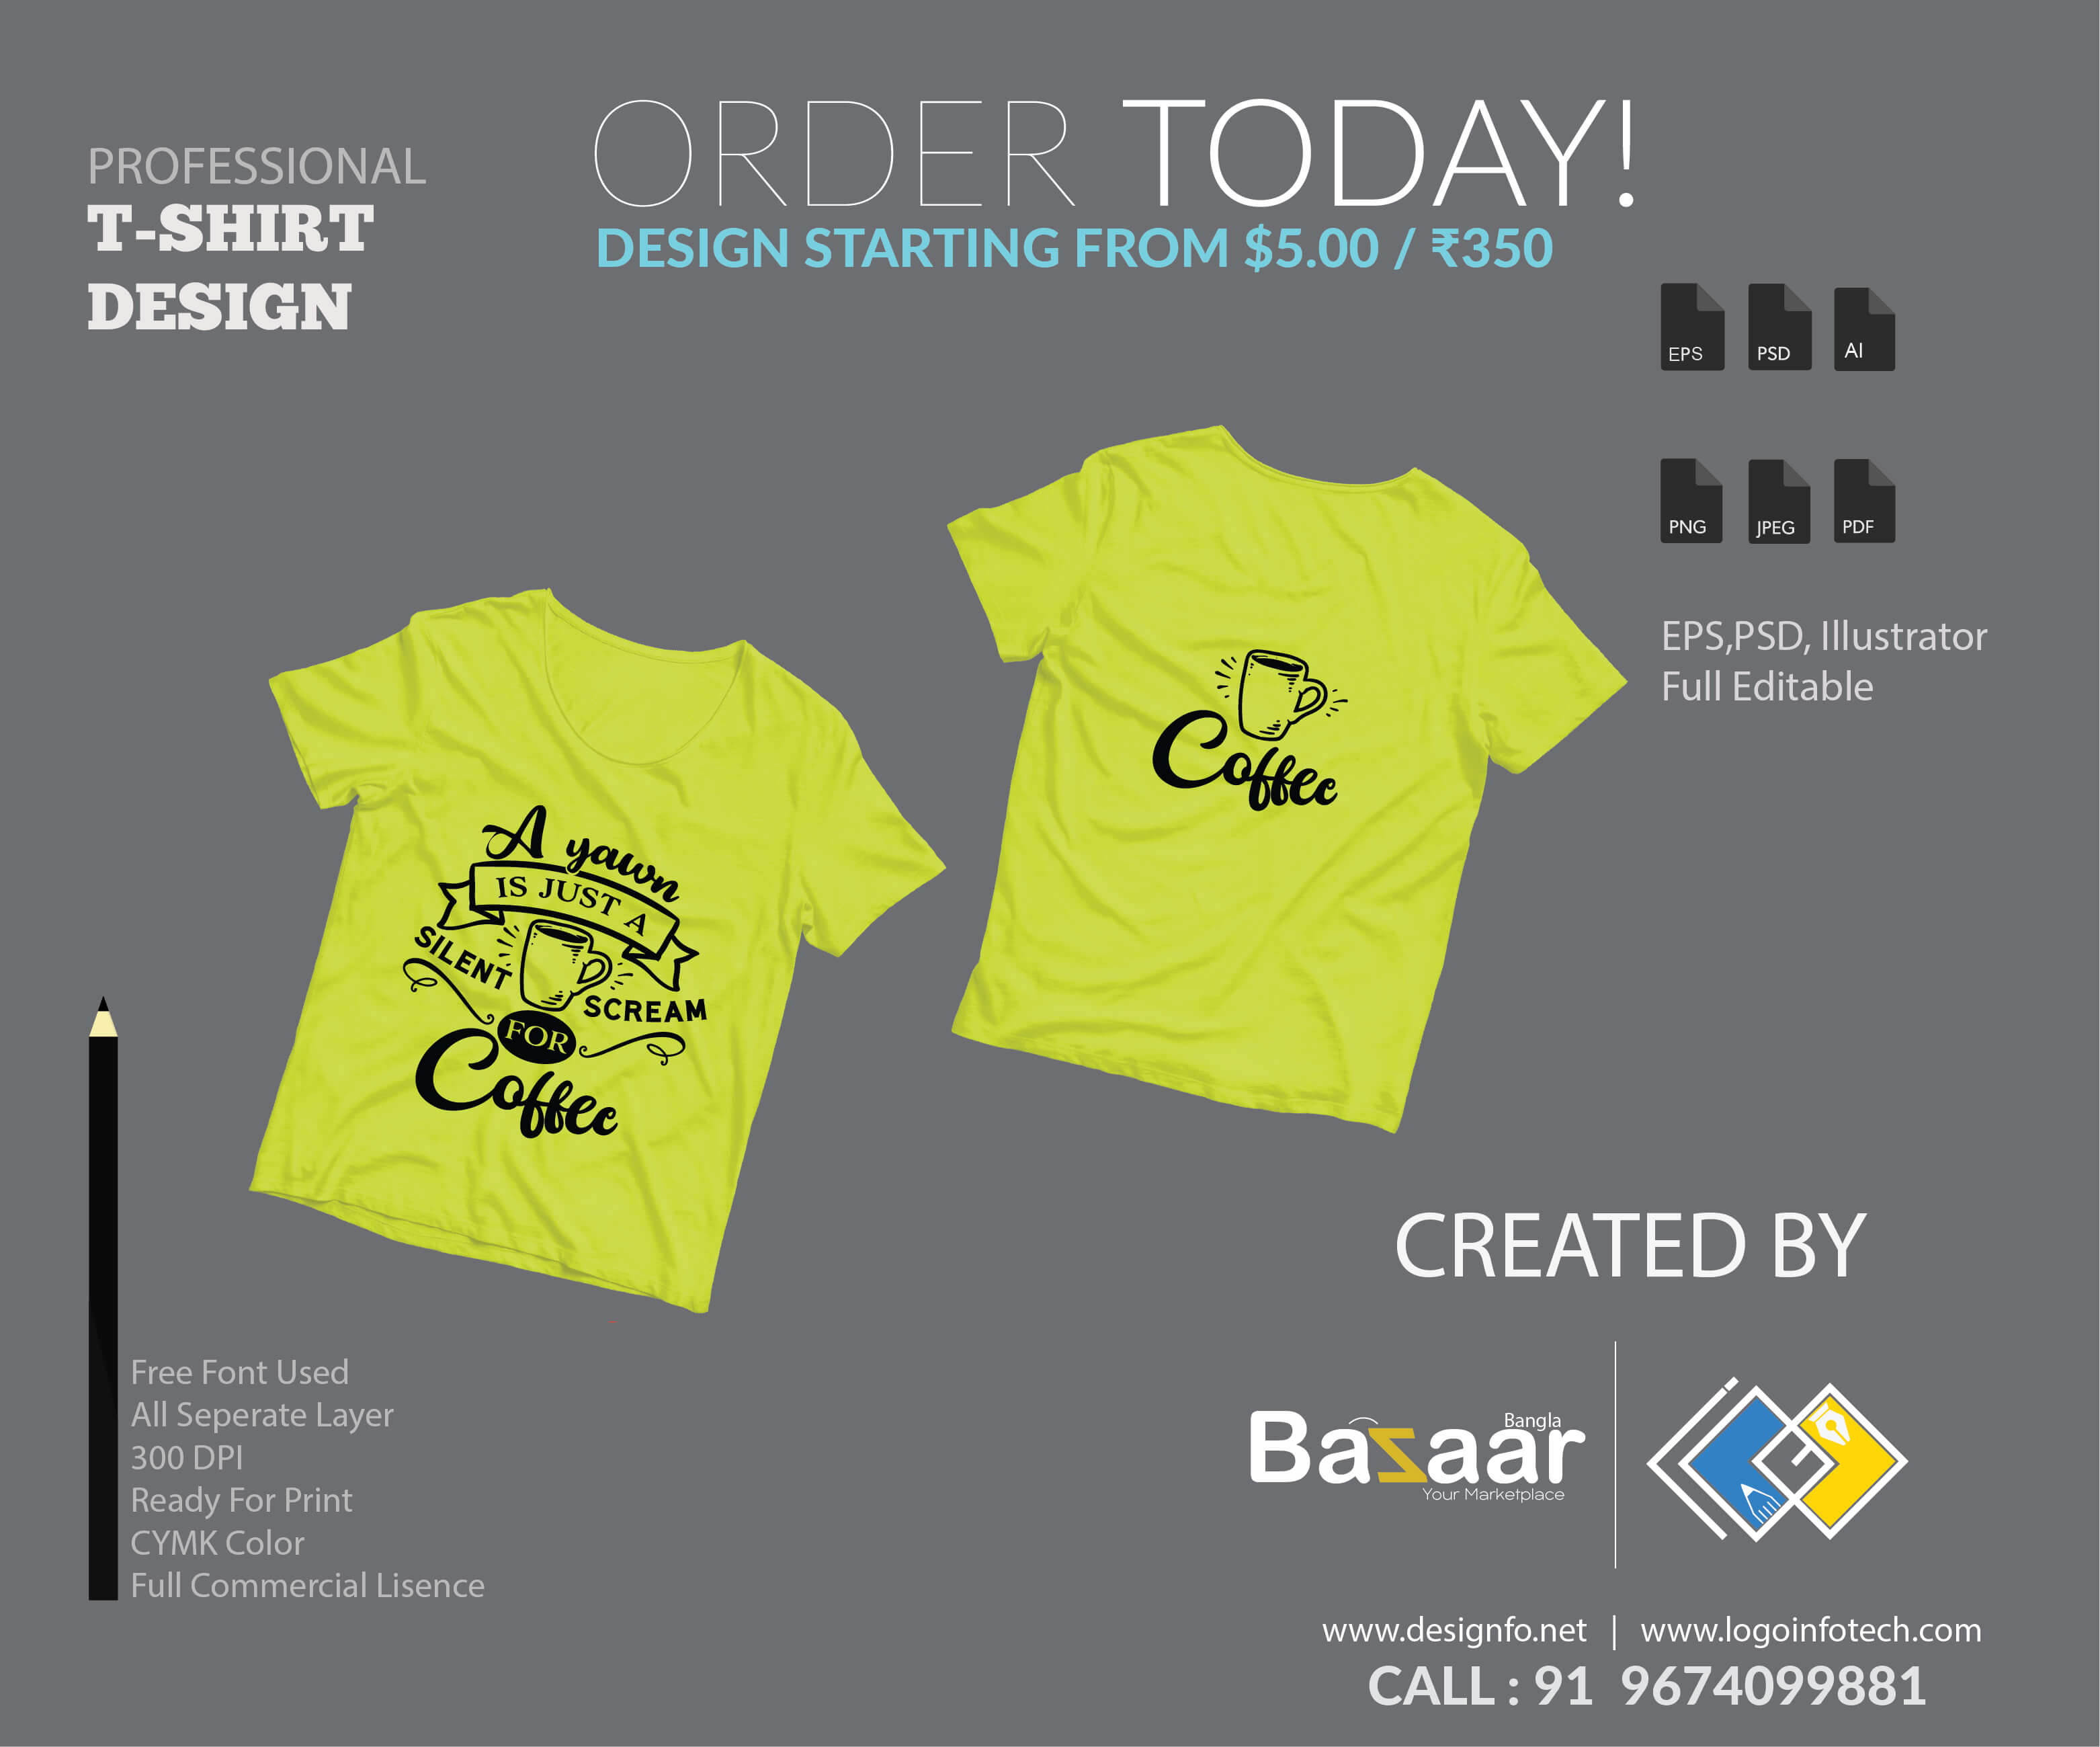 T-Shirt Design Service, T-Shirt & Apparel Design Services, Custom T Shirts